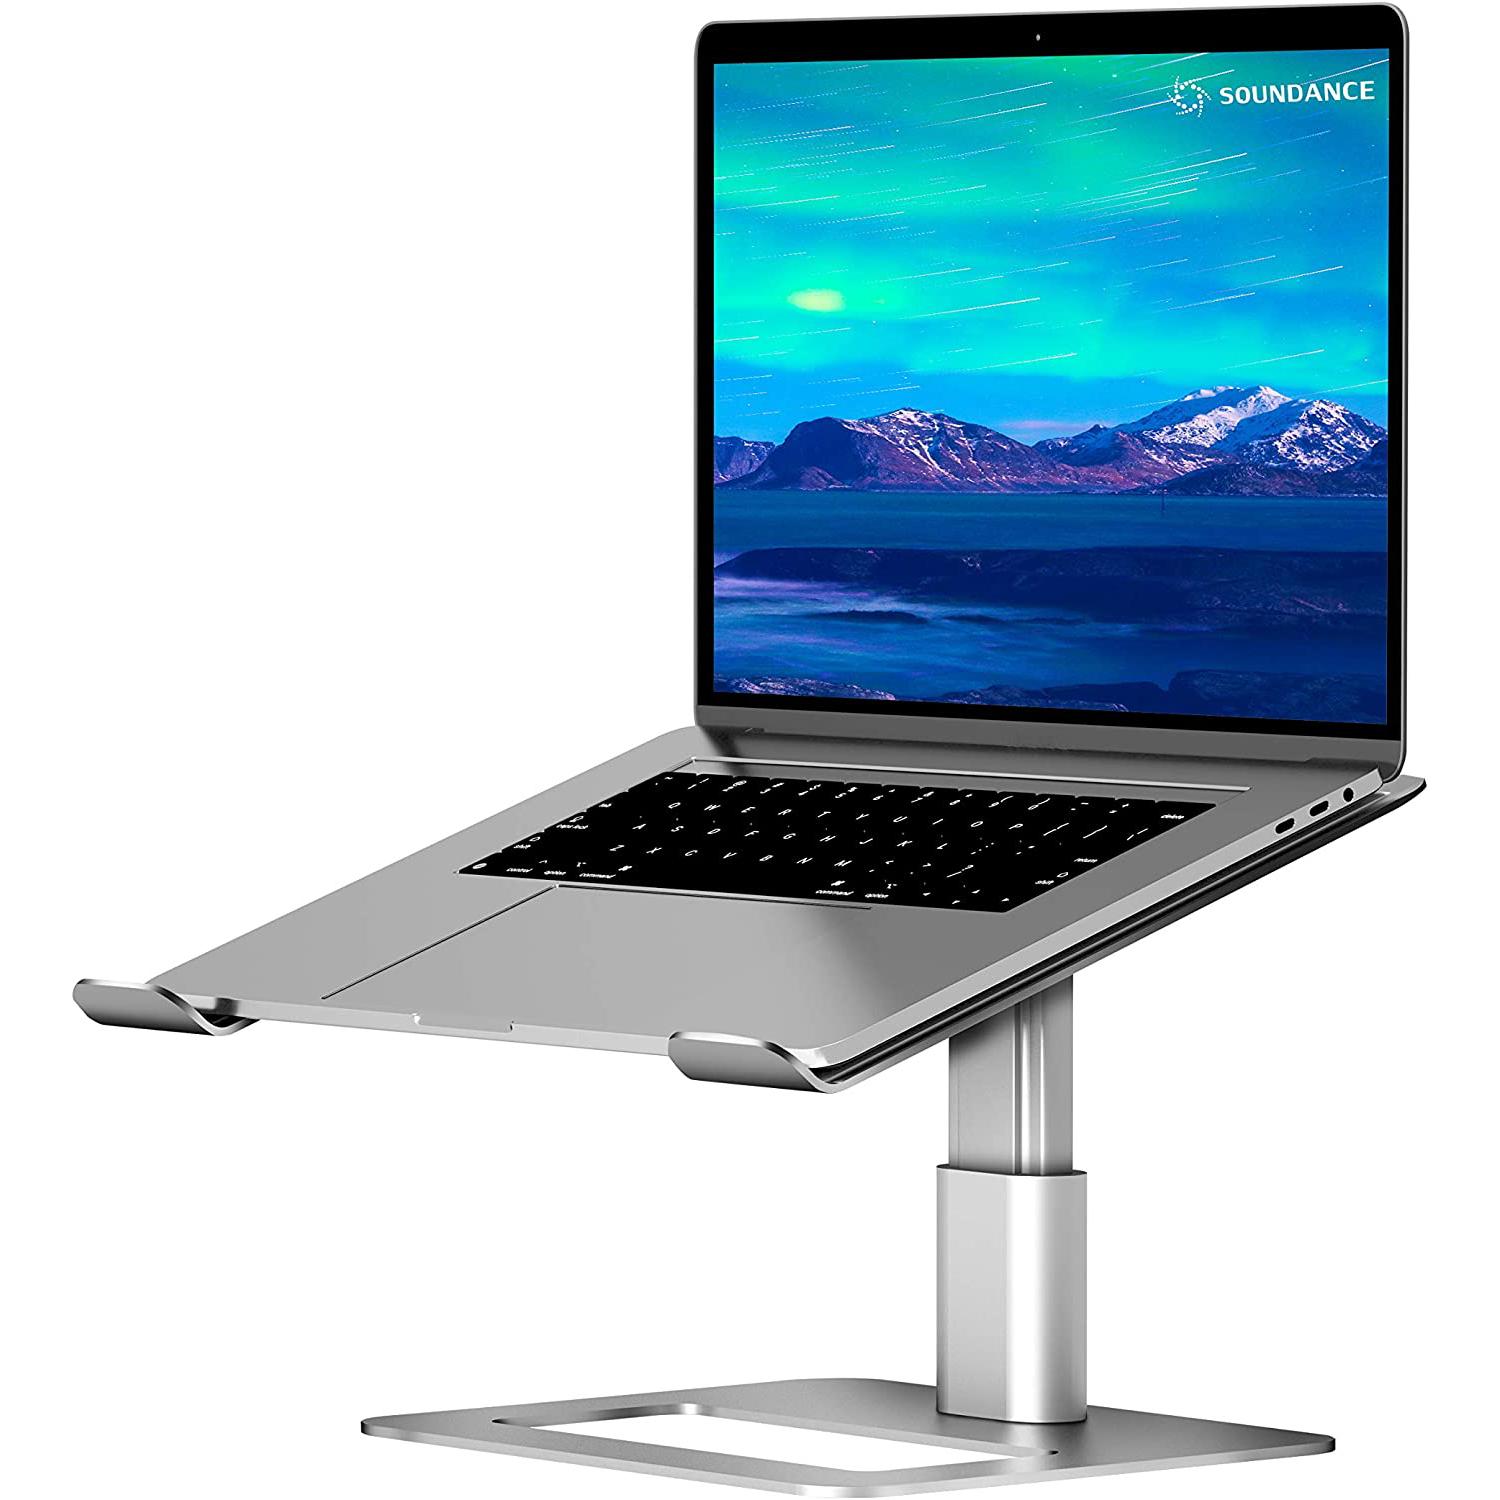 Soundance Ergonomic Adjustable Aluminum Laptop Riser Stand Mount for $11.99 Shipped